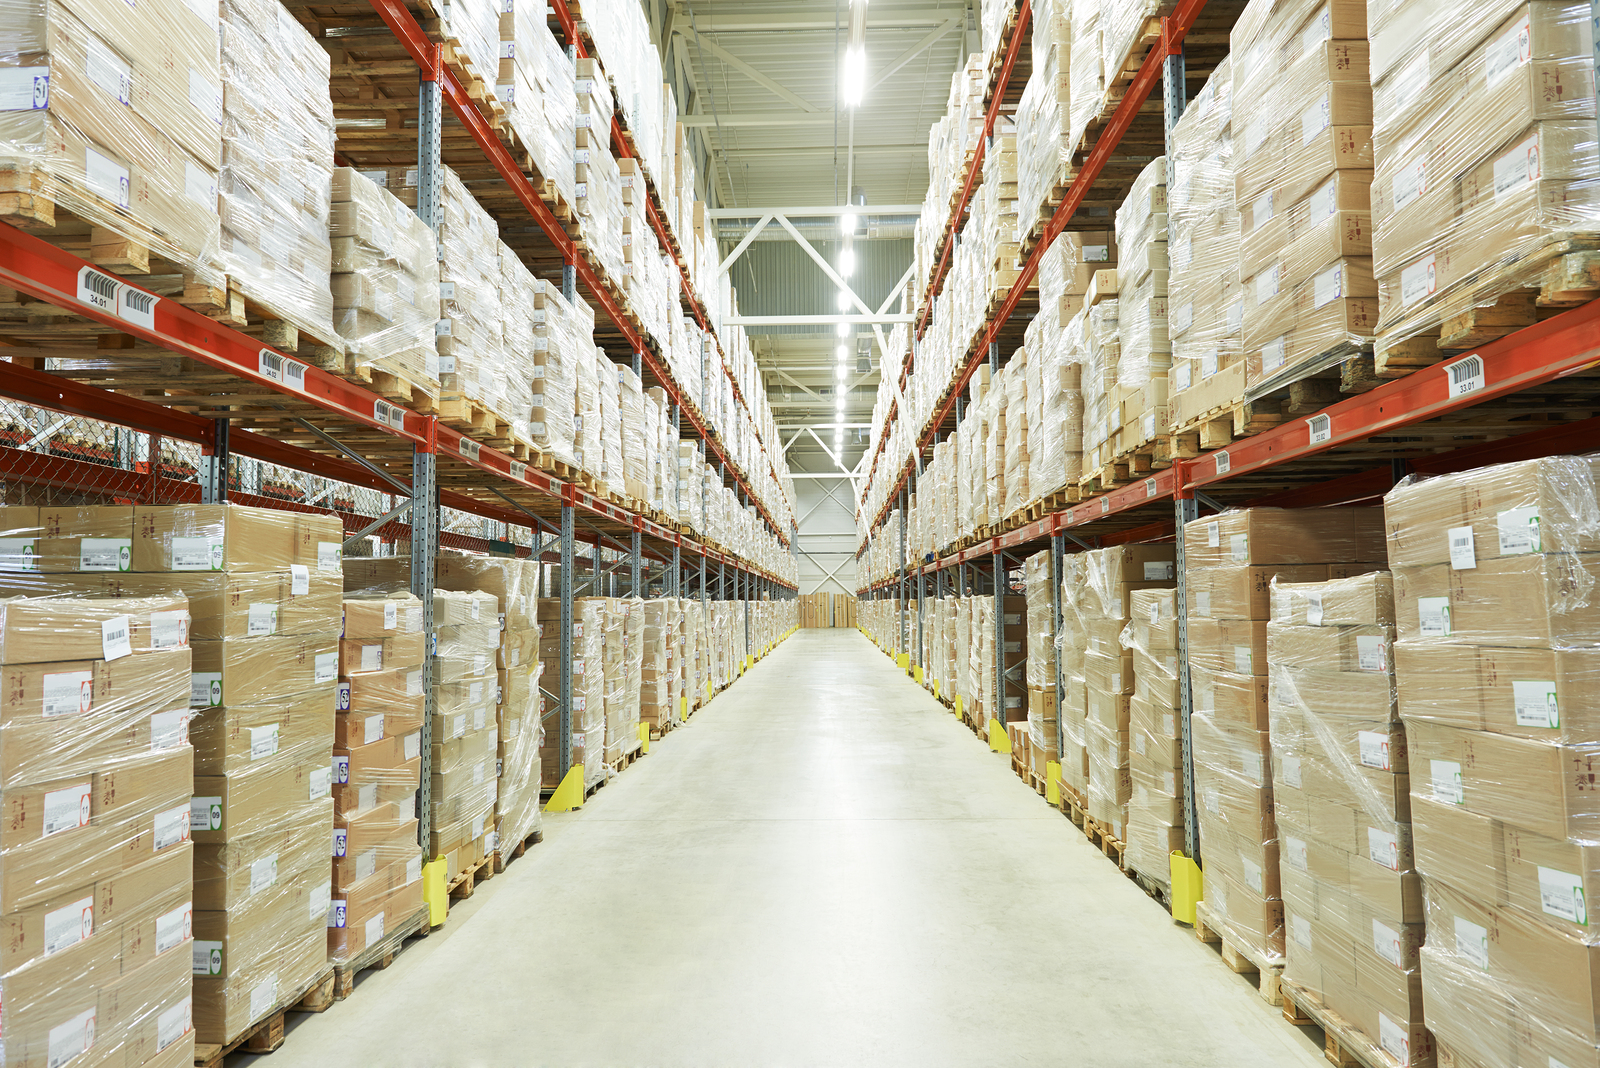 bigstock-interior-of-warehouse-rows-of-88665950.jpg